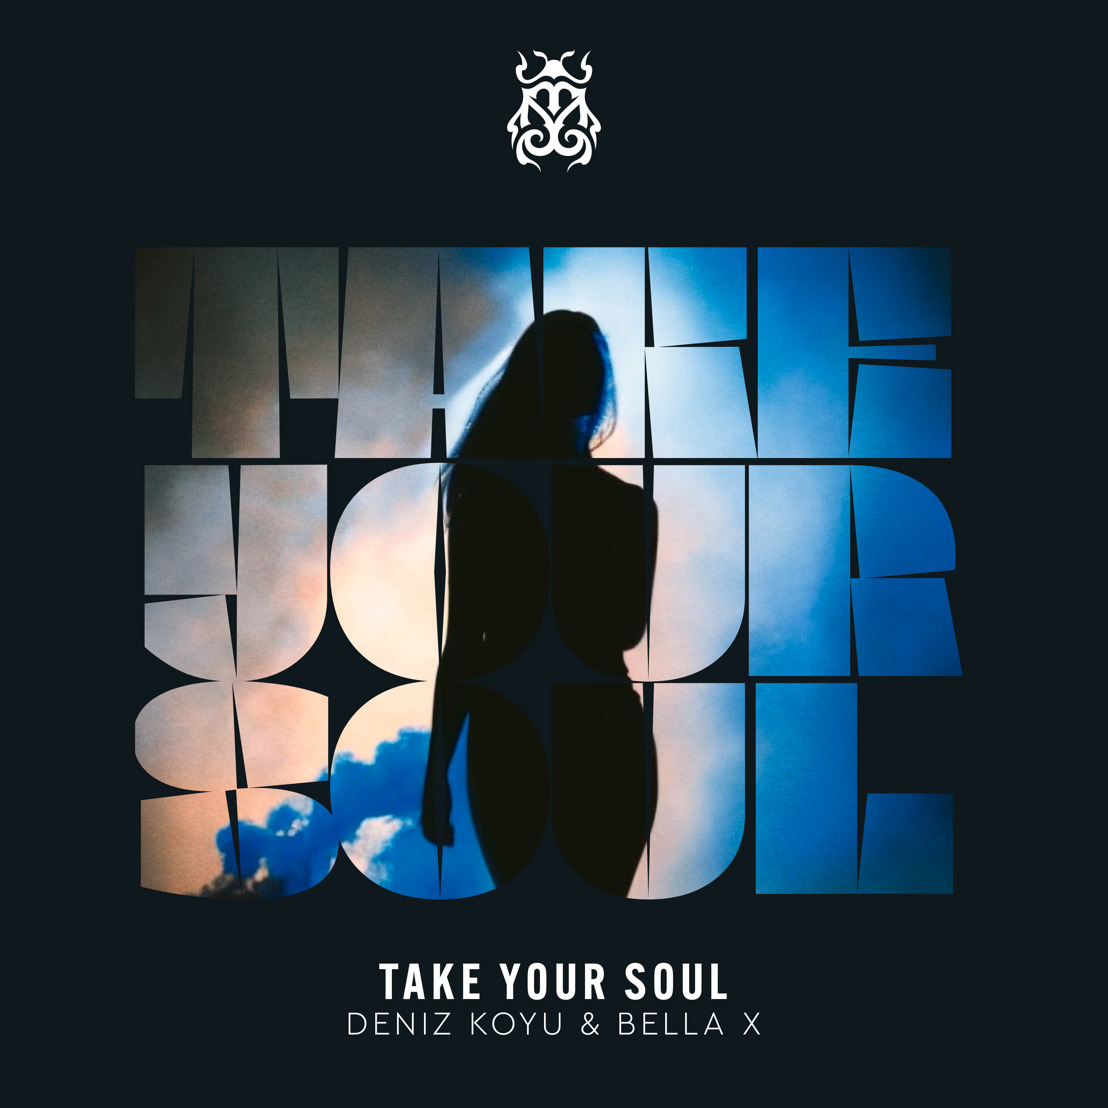 Deniz Koyu teams up with BELLA X for ‘Take Your Soul’